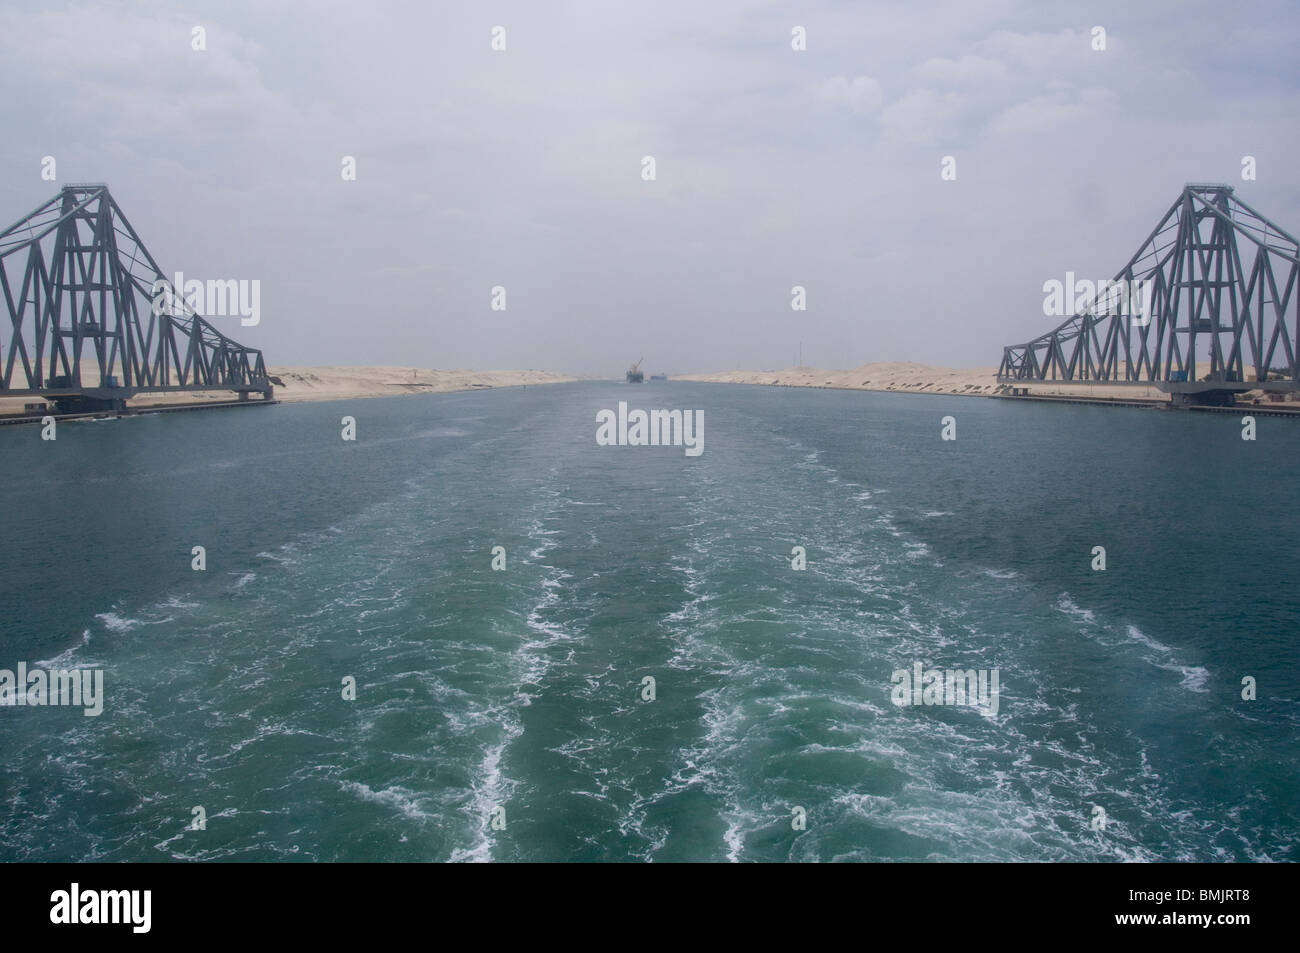 Egypt, Suez Canal. Bridge between Asia & Africa, longest swinging bridge in the world. Stock Photo